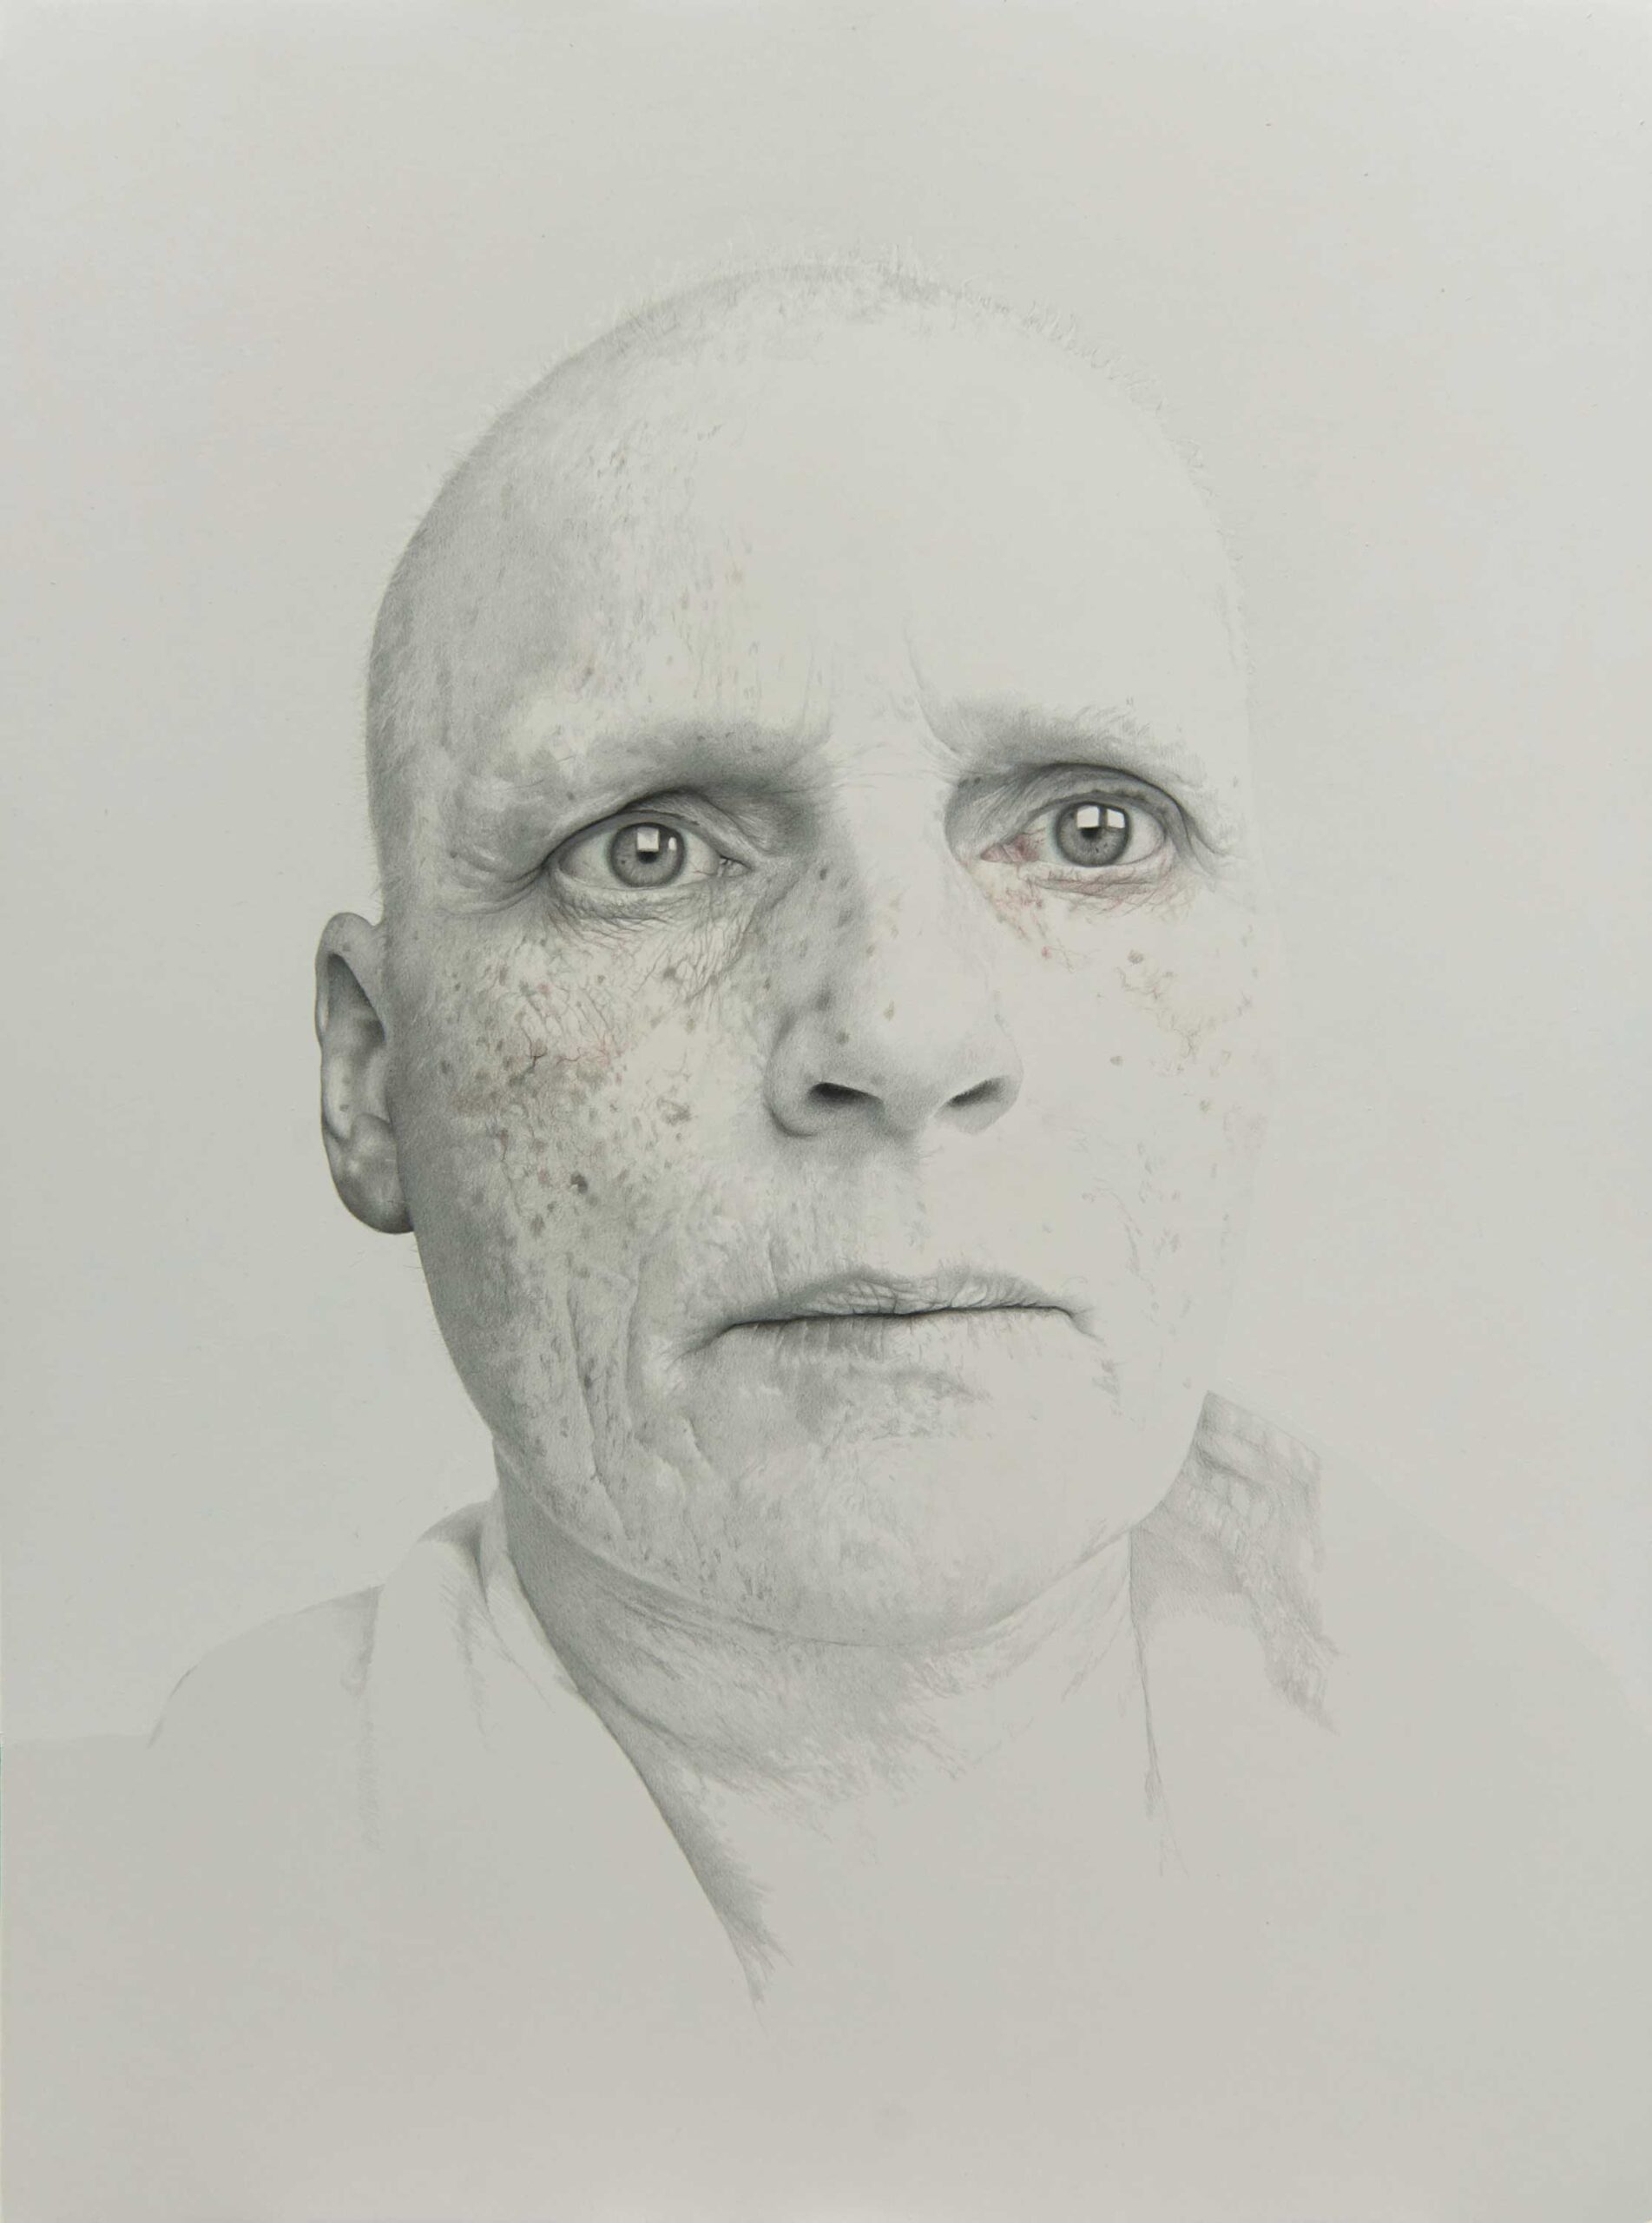 Annemarie Busschers, "Self-Portrait: Breast Cancer," 2020, graphite on cardboard, 35 1/2 x 27 1/2 in., collection of the artist